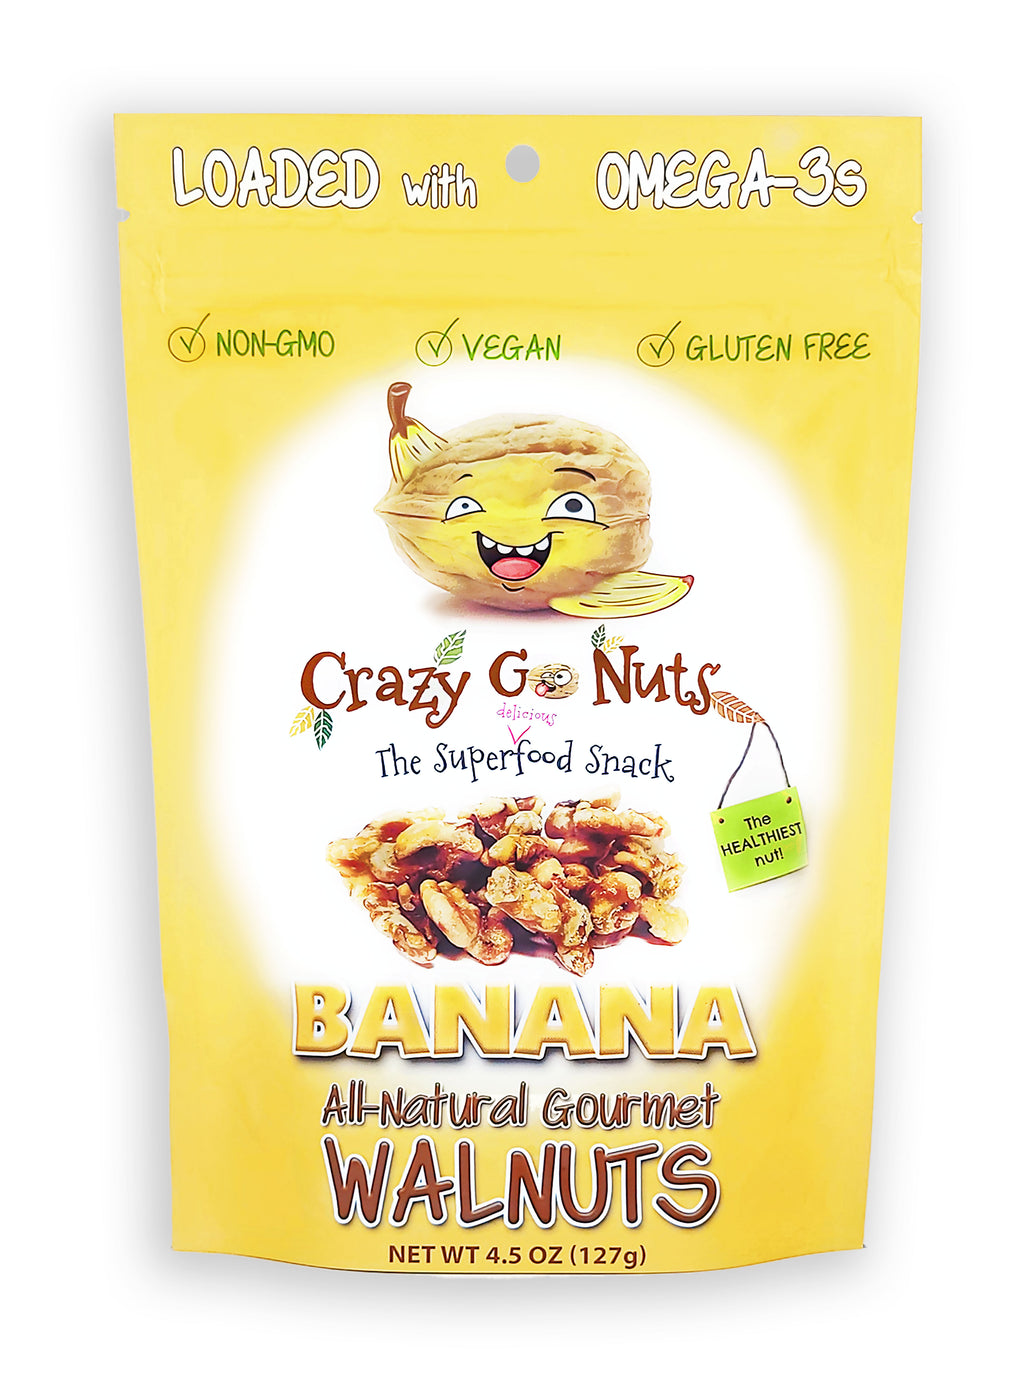 4.5 oz. bag of banana coated walnut snacks